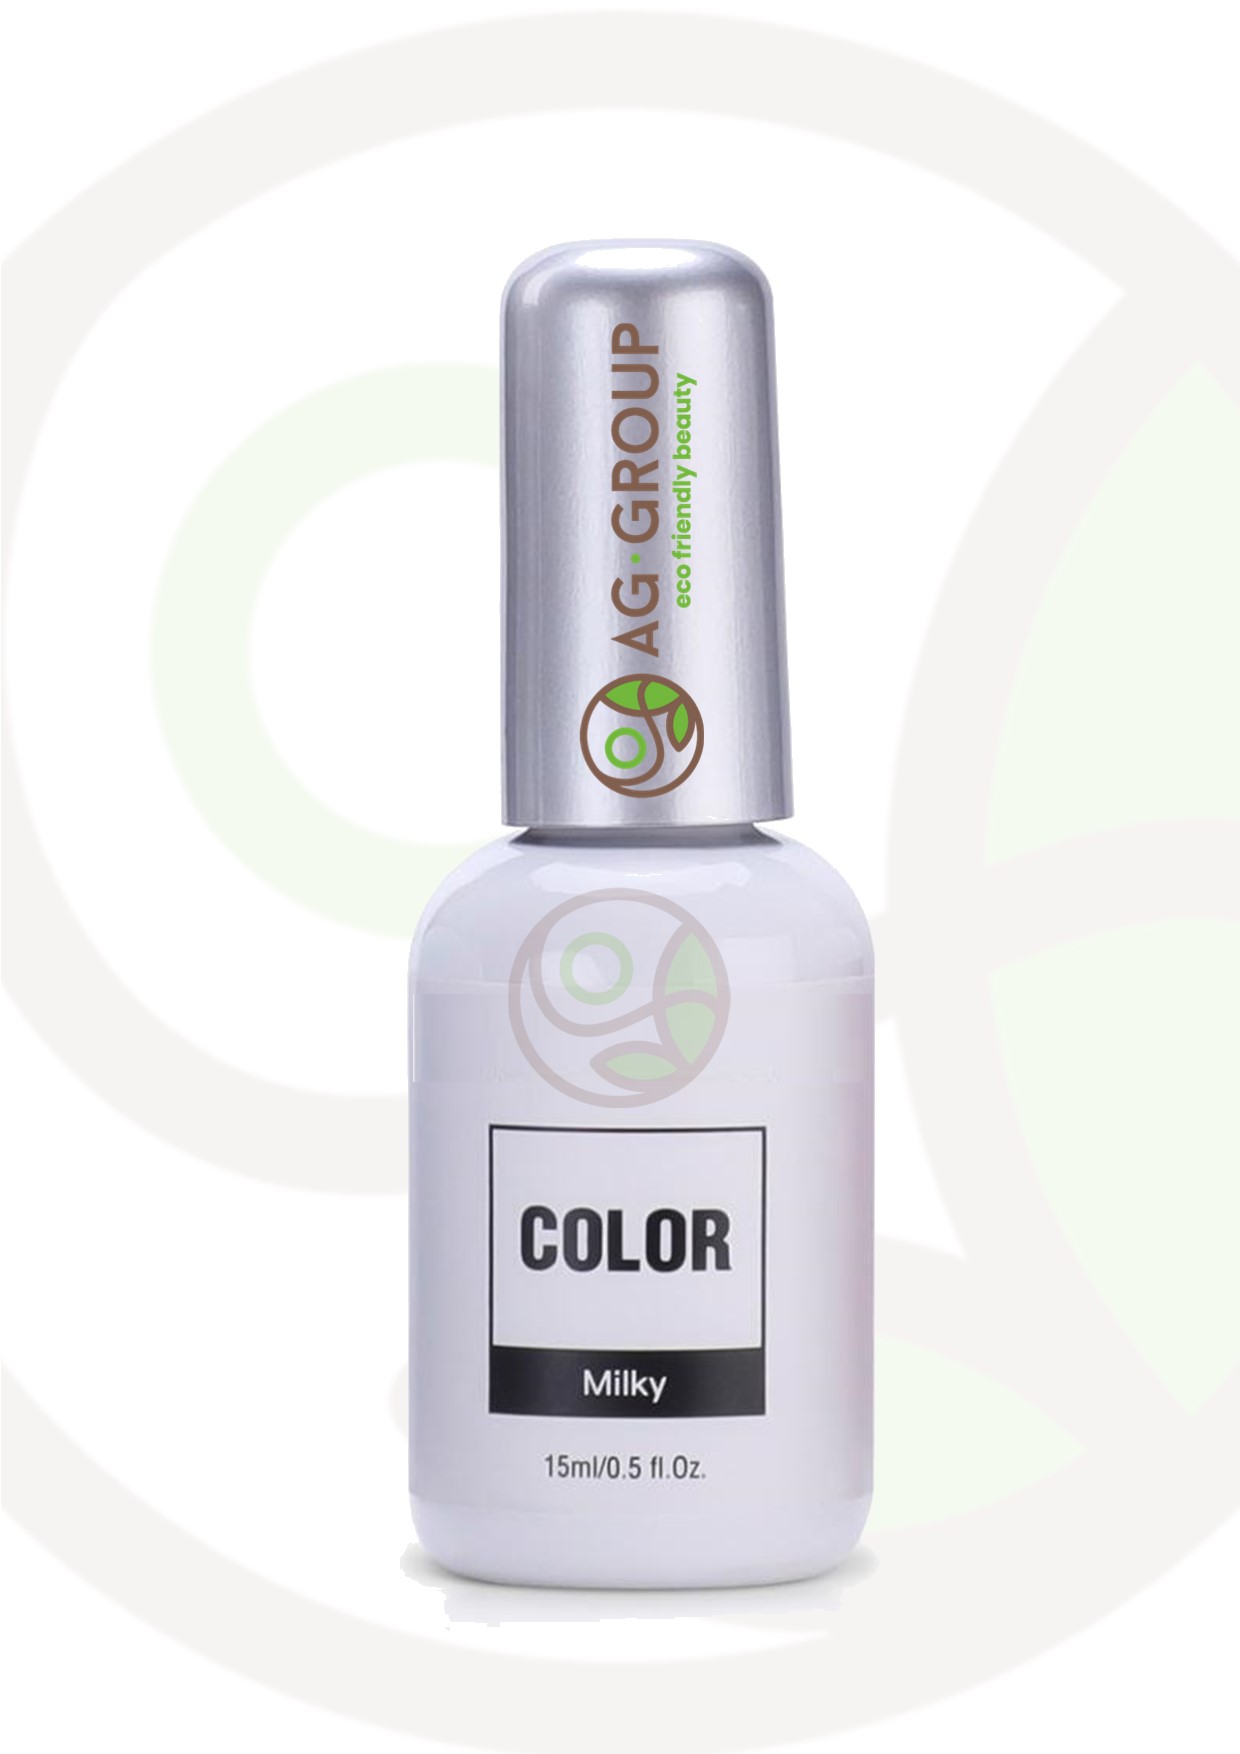 Featured image for “Gel polish soak -off led/uv- color milky”